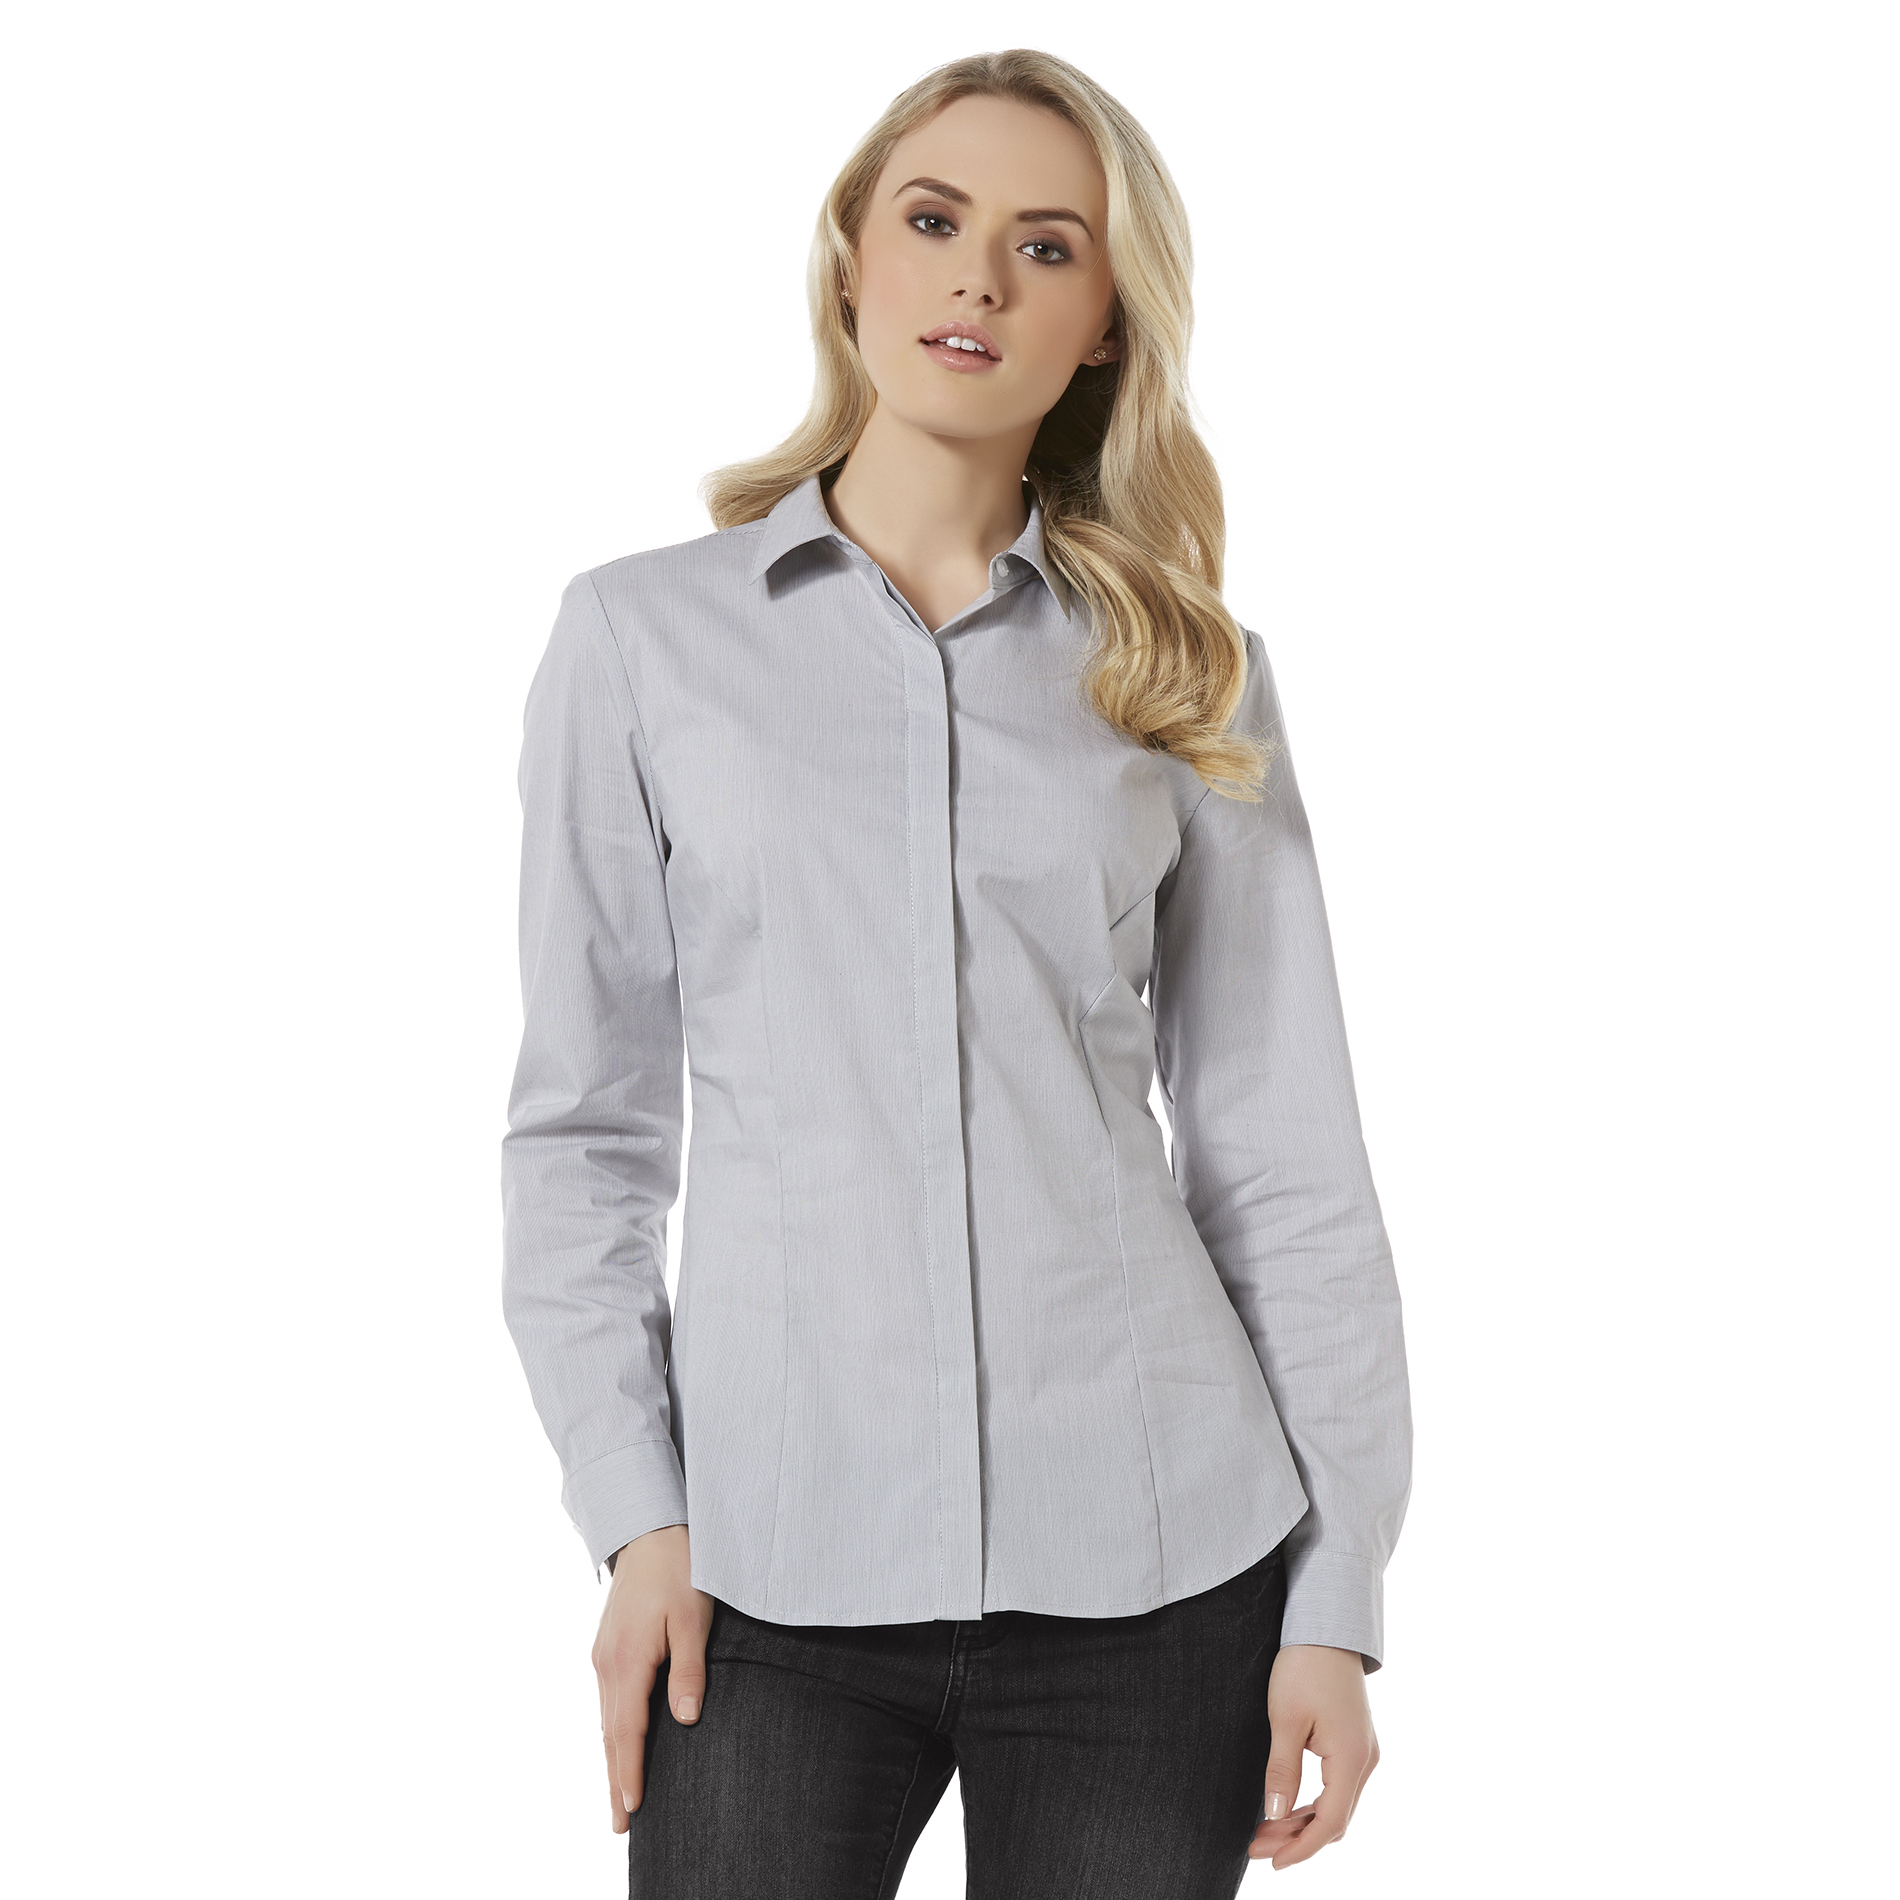 Covington Women's Essential Button-Up Shirt - Striped